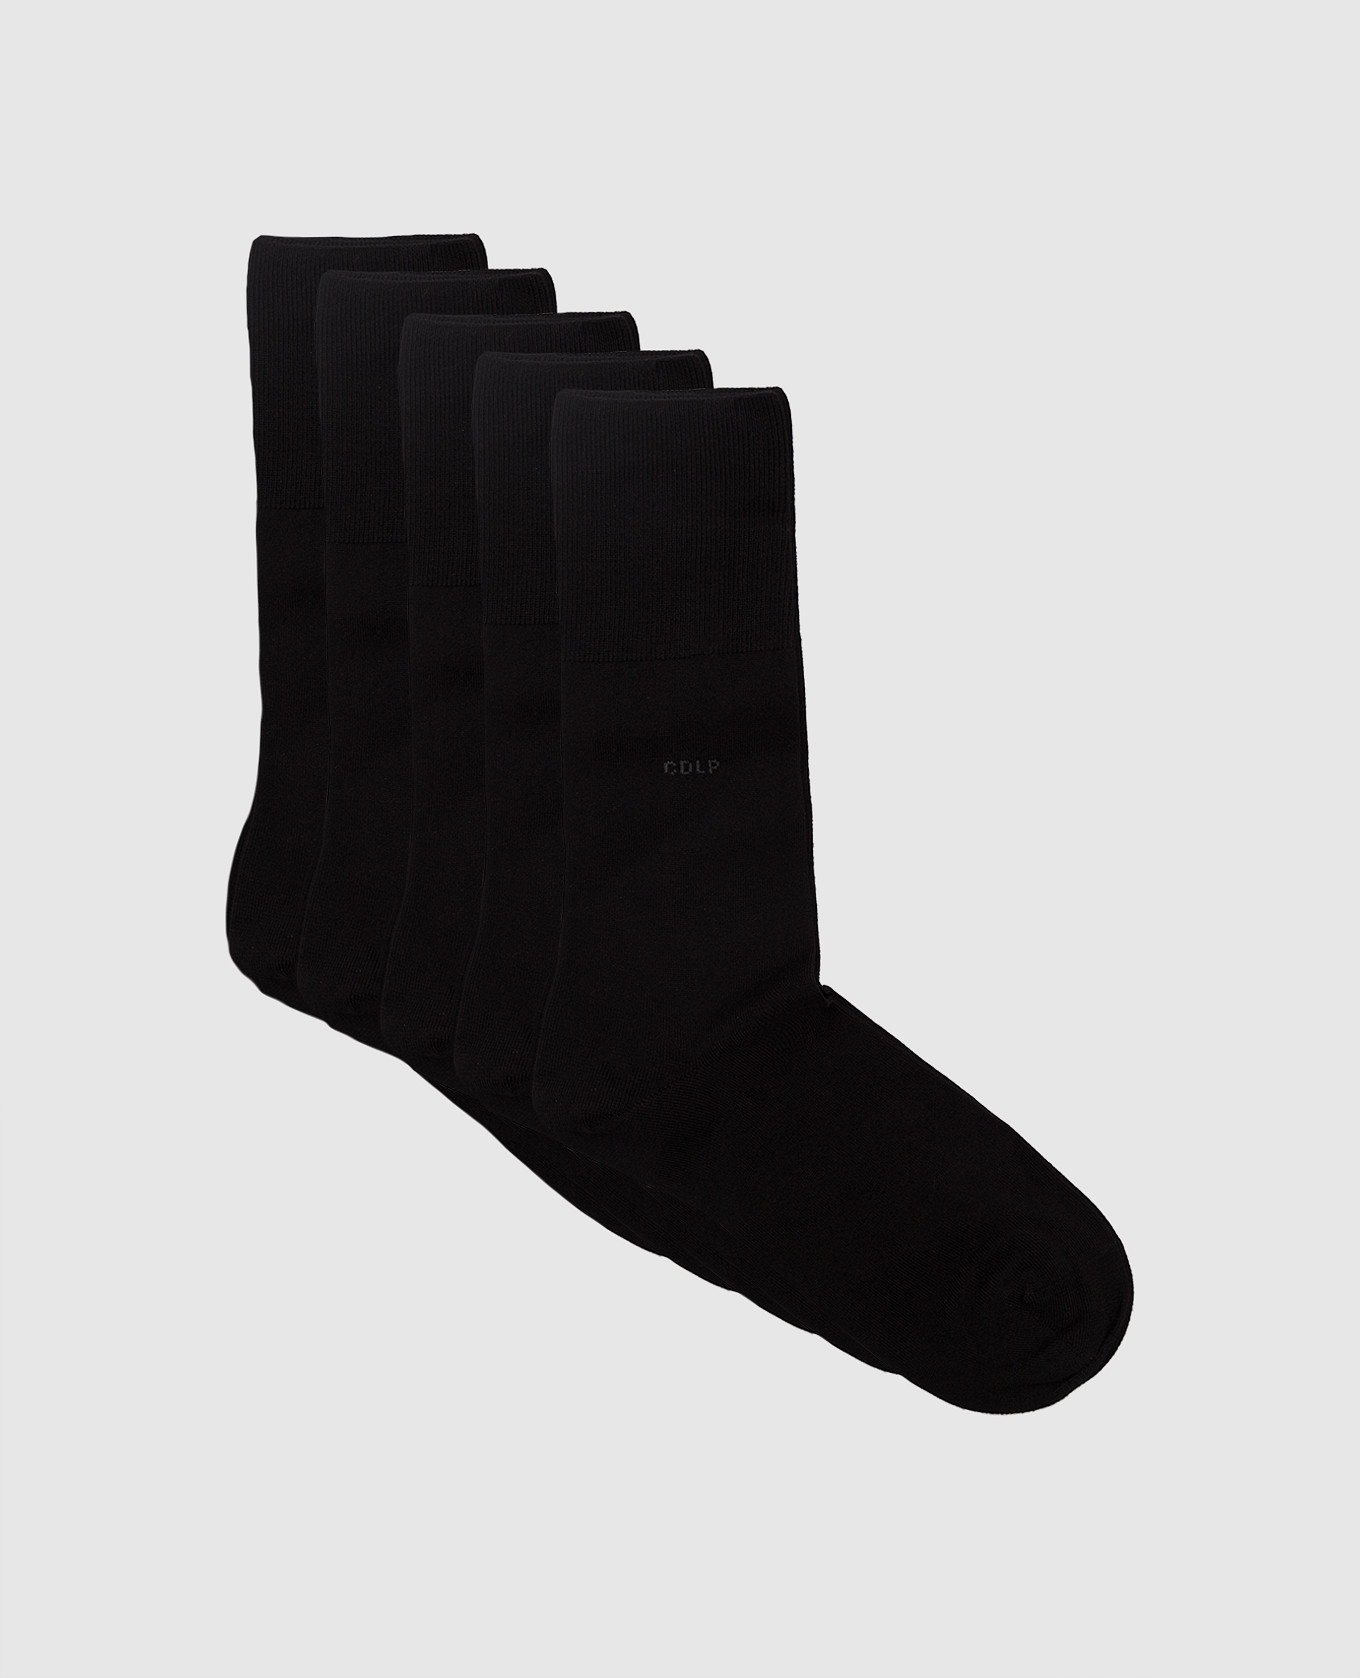 Set of black socks with logo pattern